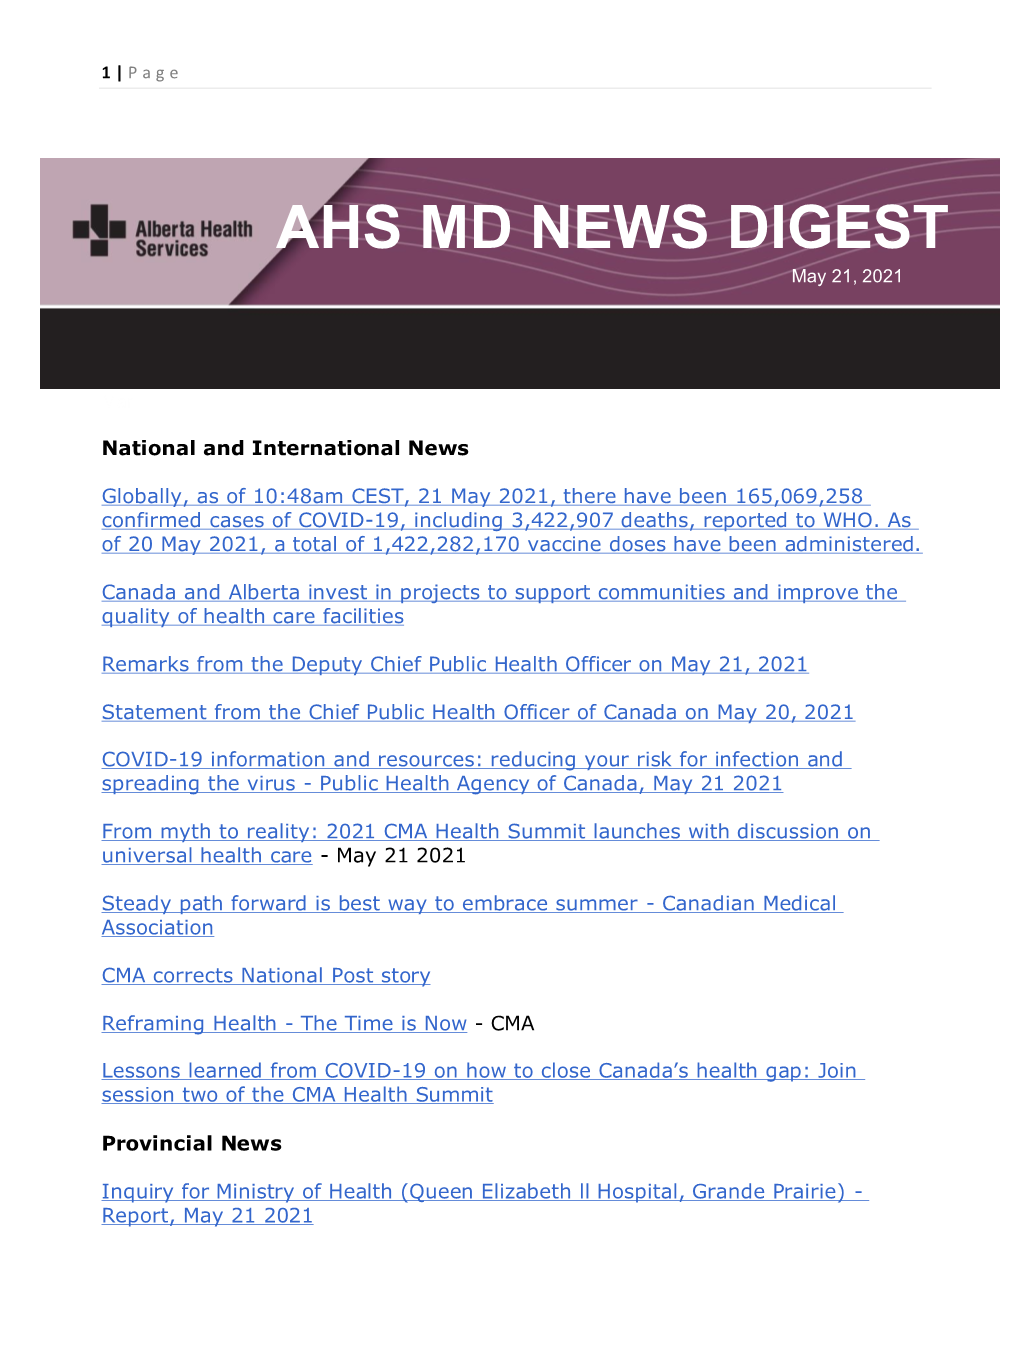 AHS MD NEWS DIGEST May 21, 2021